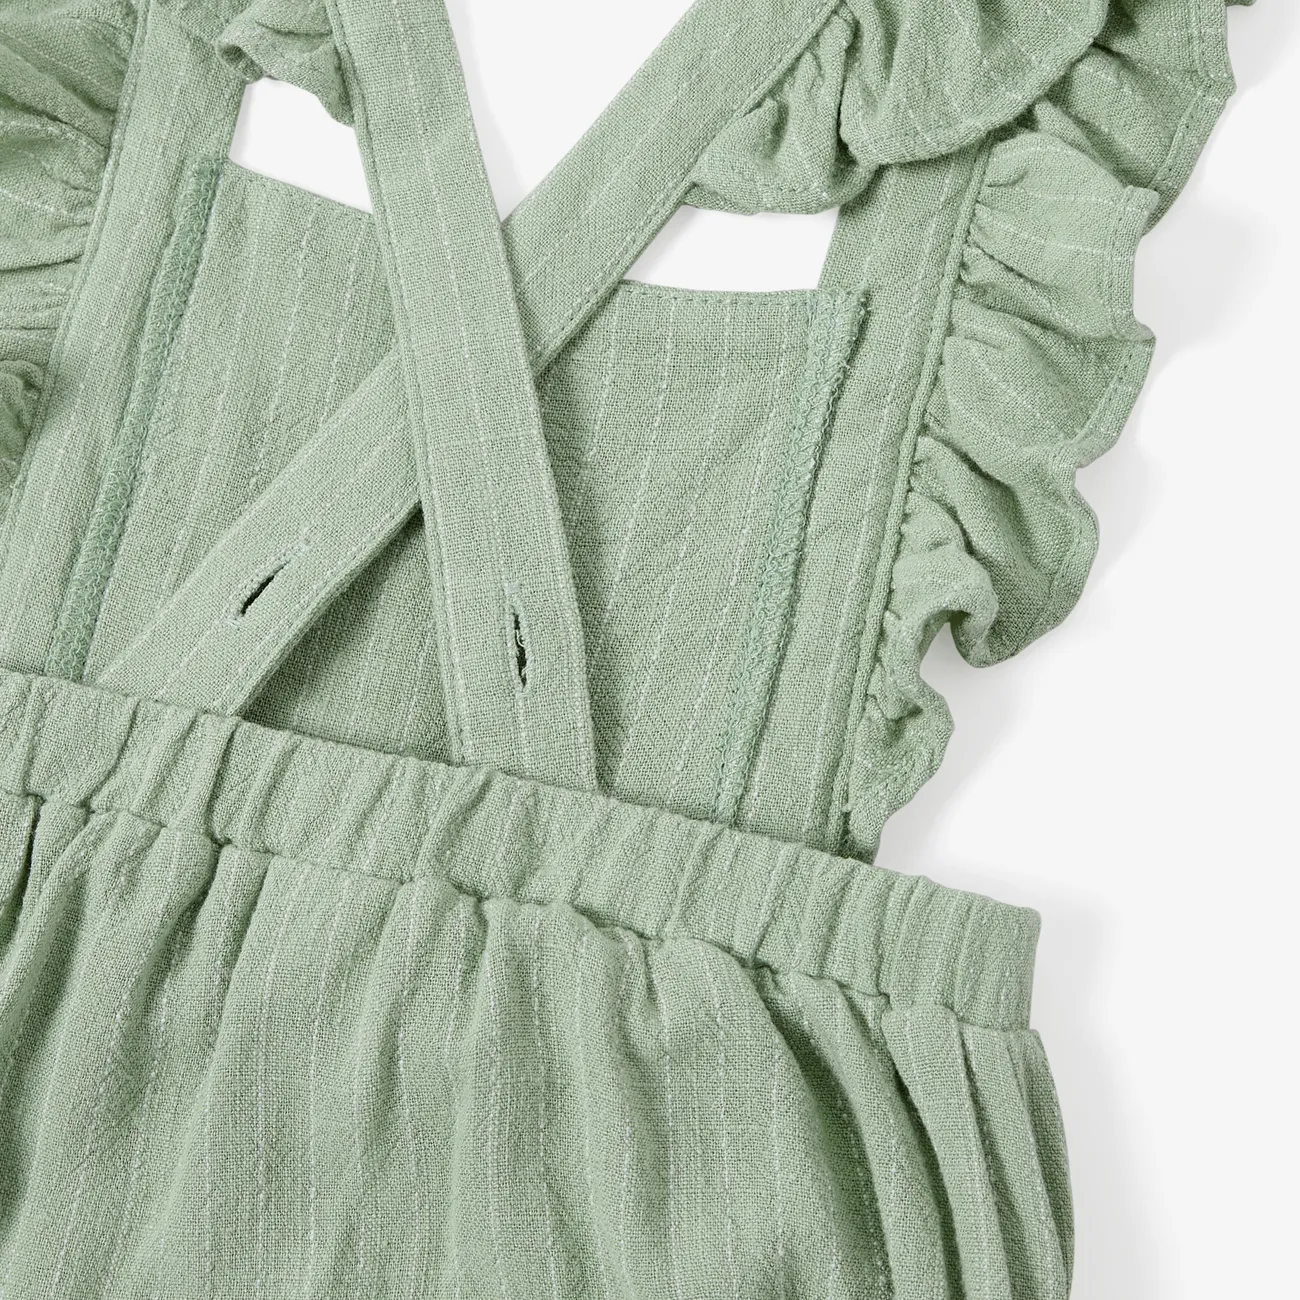 Family Matching Light Green Slogan Tee and Lace sides Strap Dress Sets Aqua Green big image 1